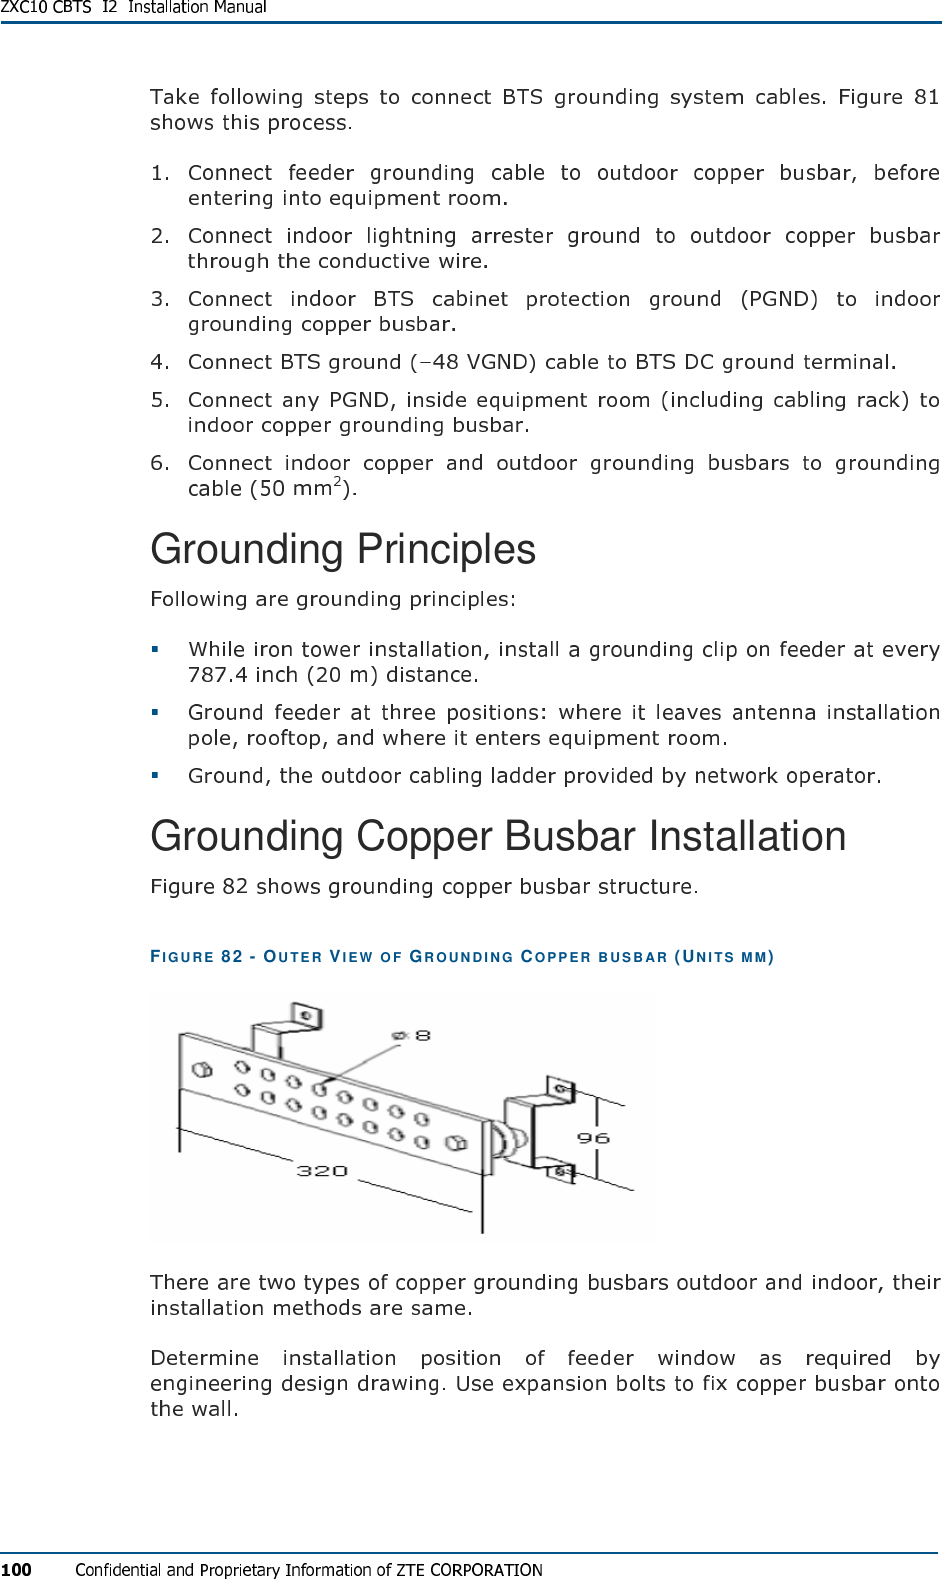       Grounding Principles    Grounding Copper Busbar Installation FIG U R E   82 - OU TE R  VIE W  OF  GR OU ND IN G  COPP ER  B US B A R  (UN I TS  MM )  